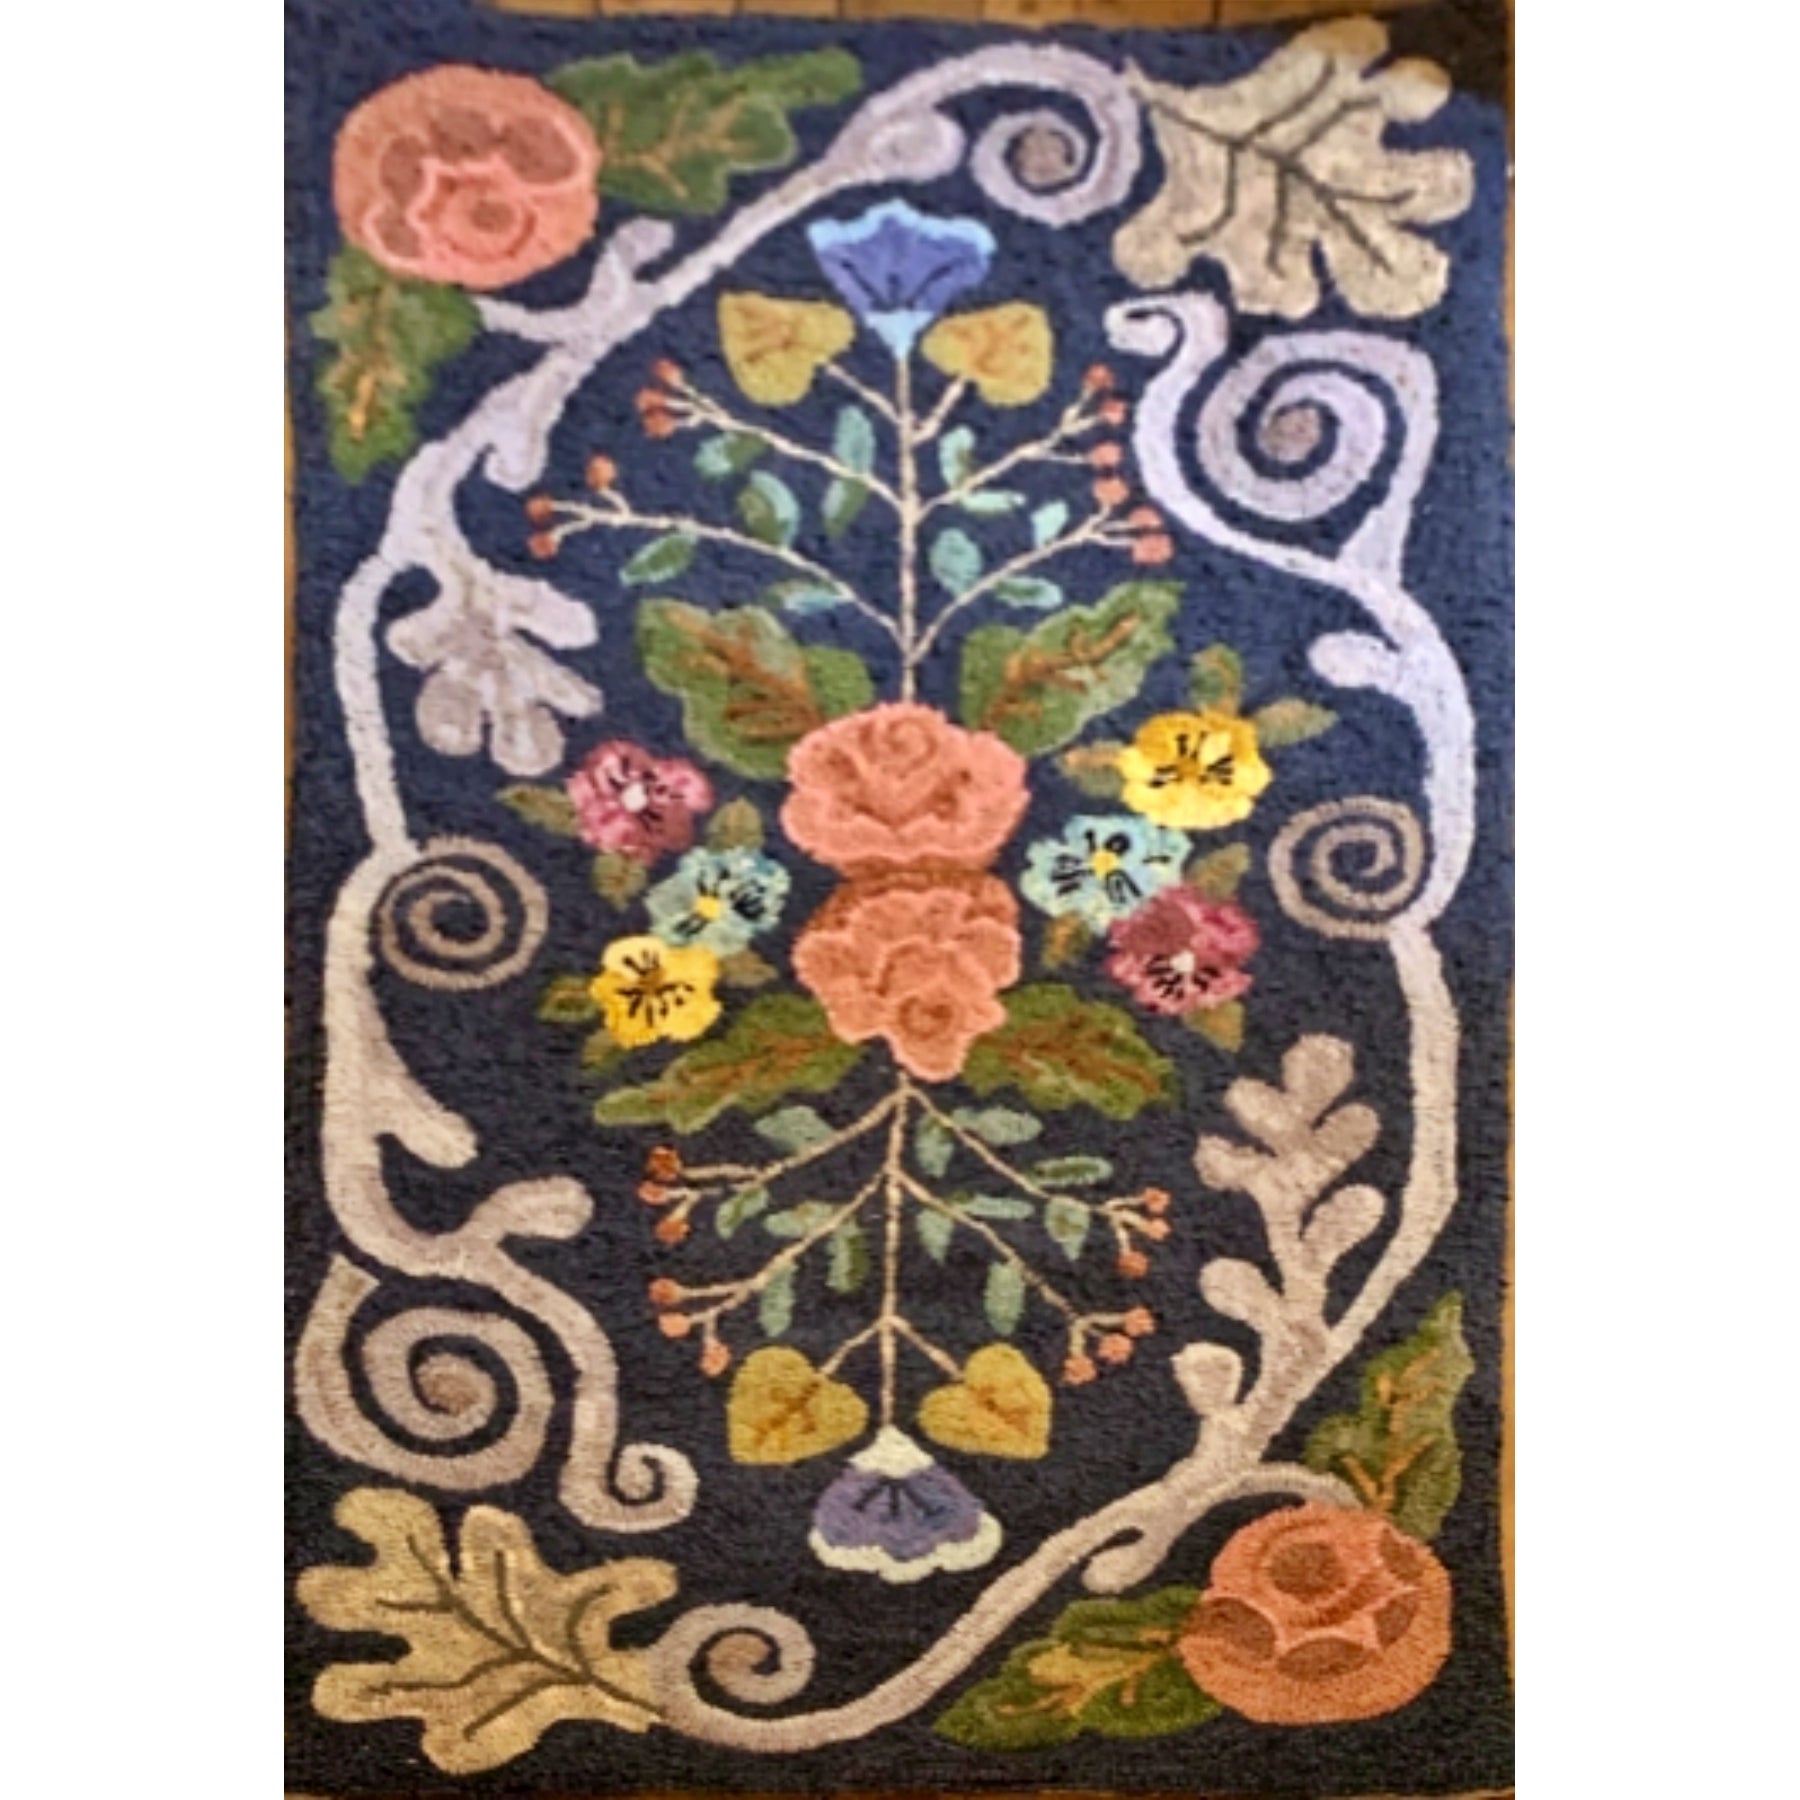 Chatham Rose, rug hooked by Joan Godfrey